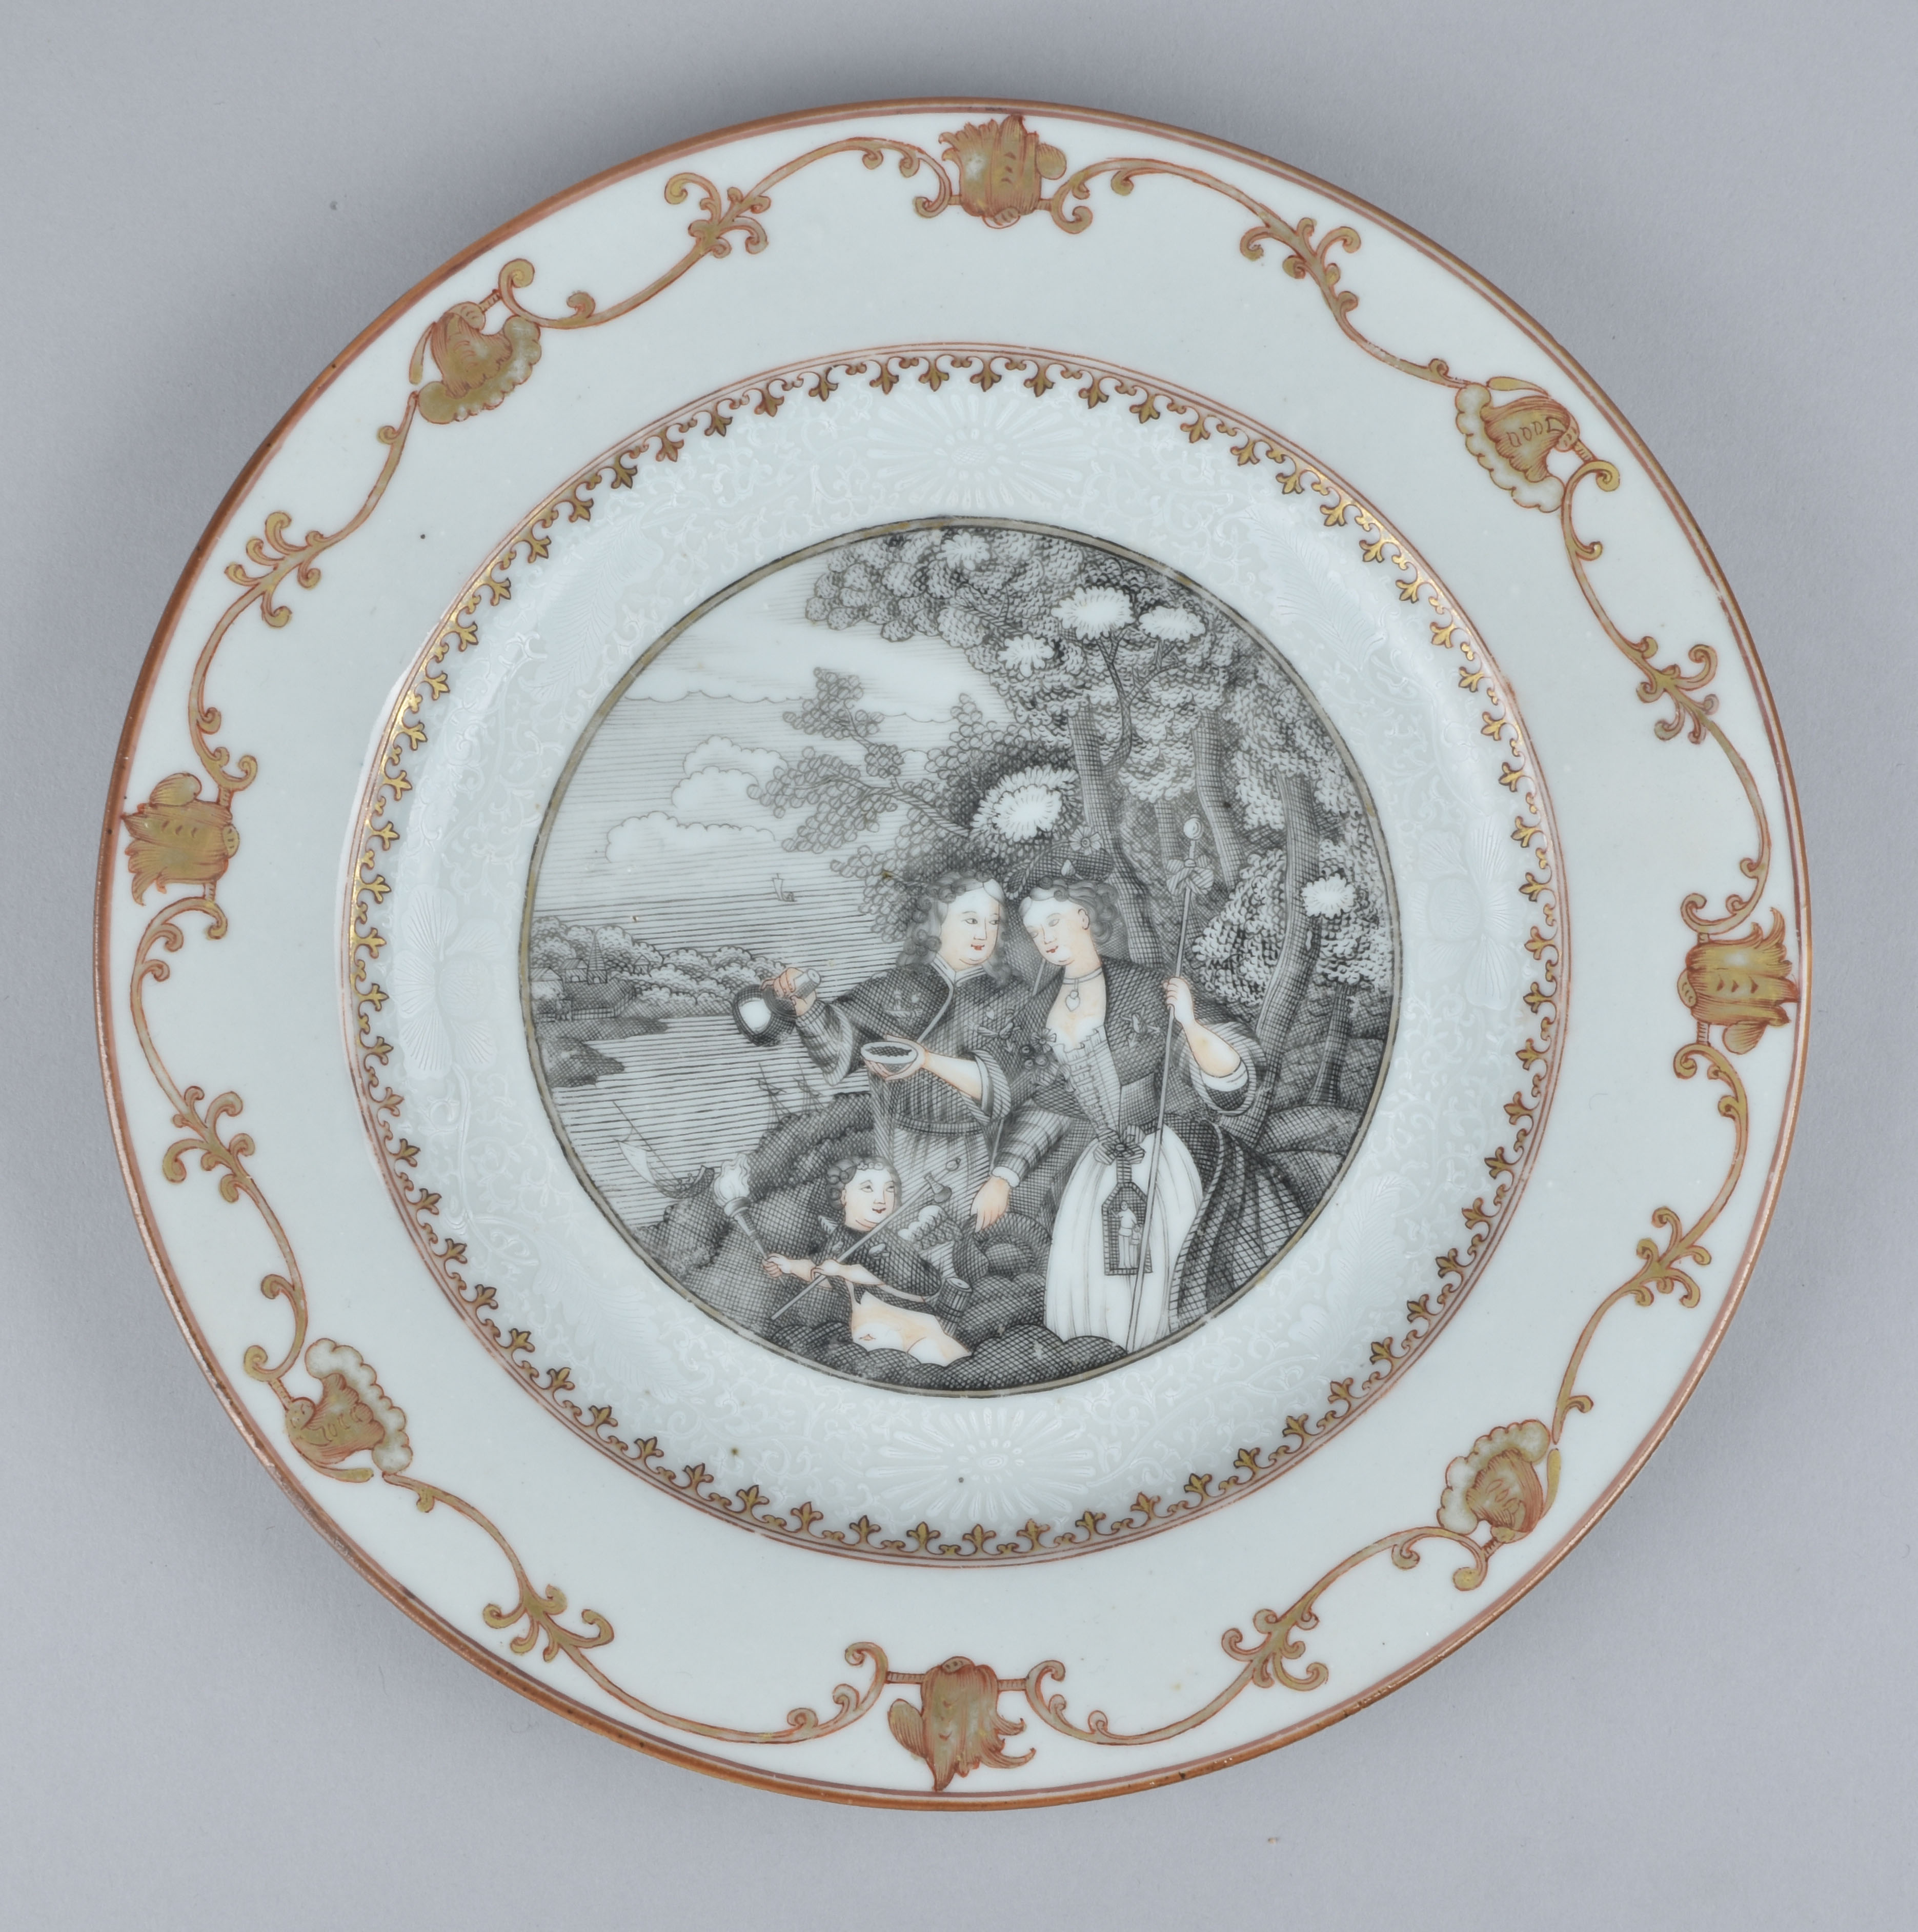 Porcelaine Qianlong (1736-1795), ca. 1745, Chine